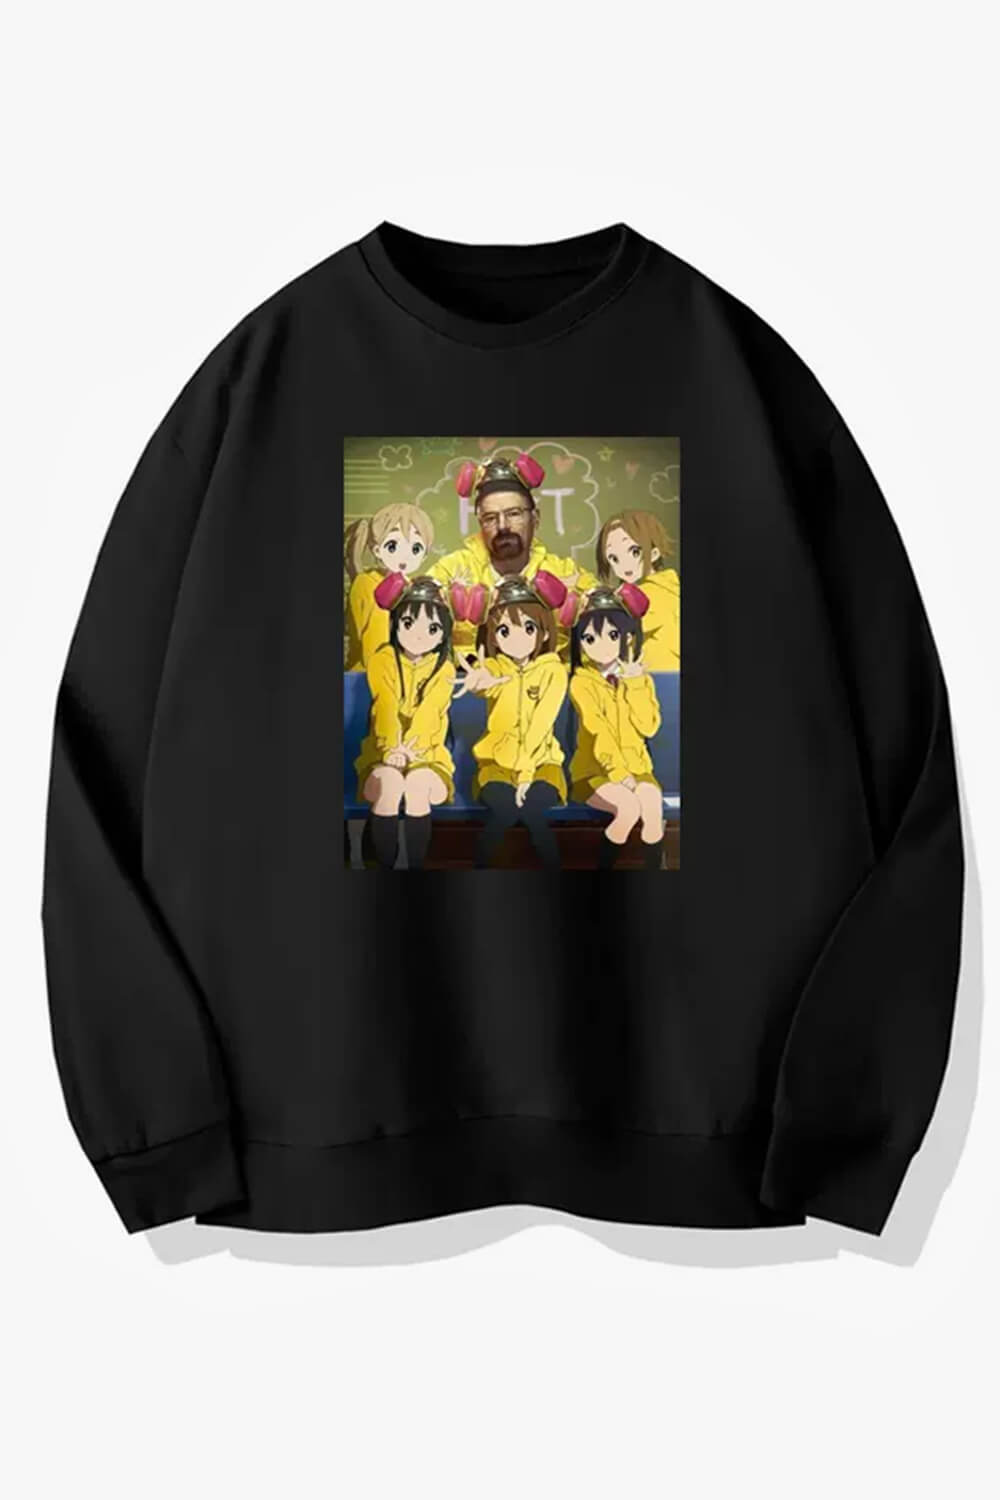 Walter White and K-On Girls Anime Sweatshirt Breaking Bad